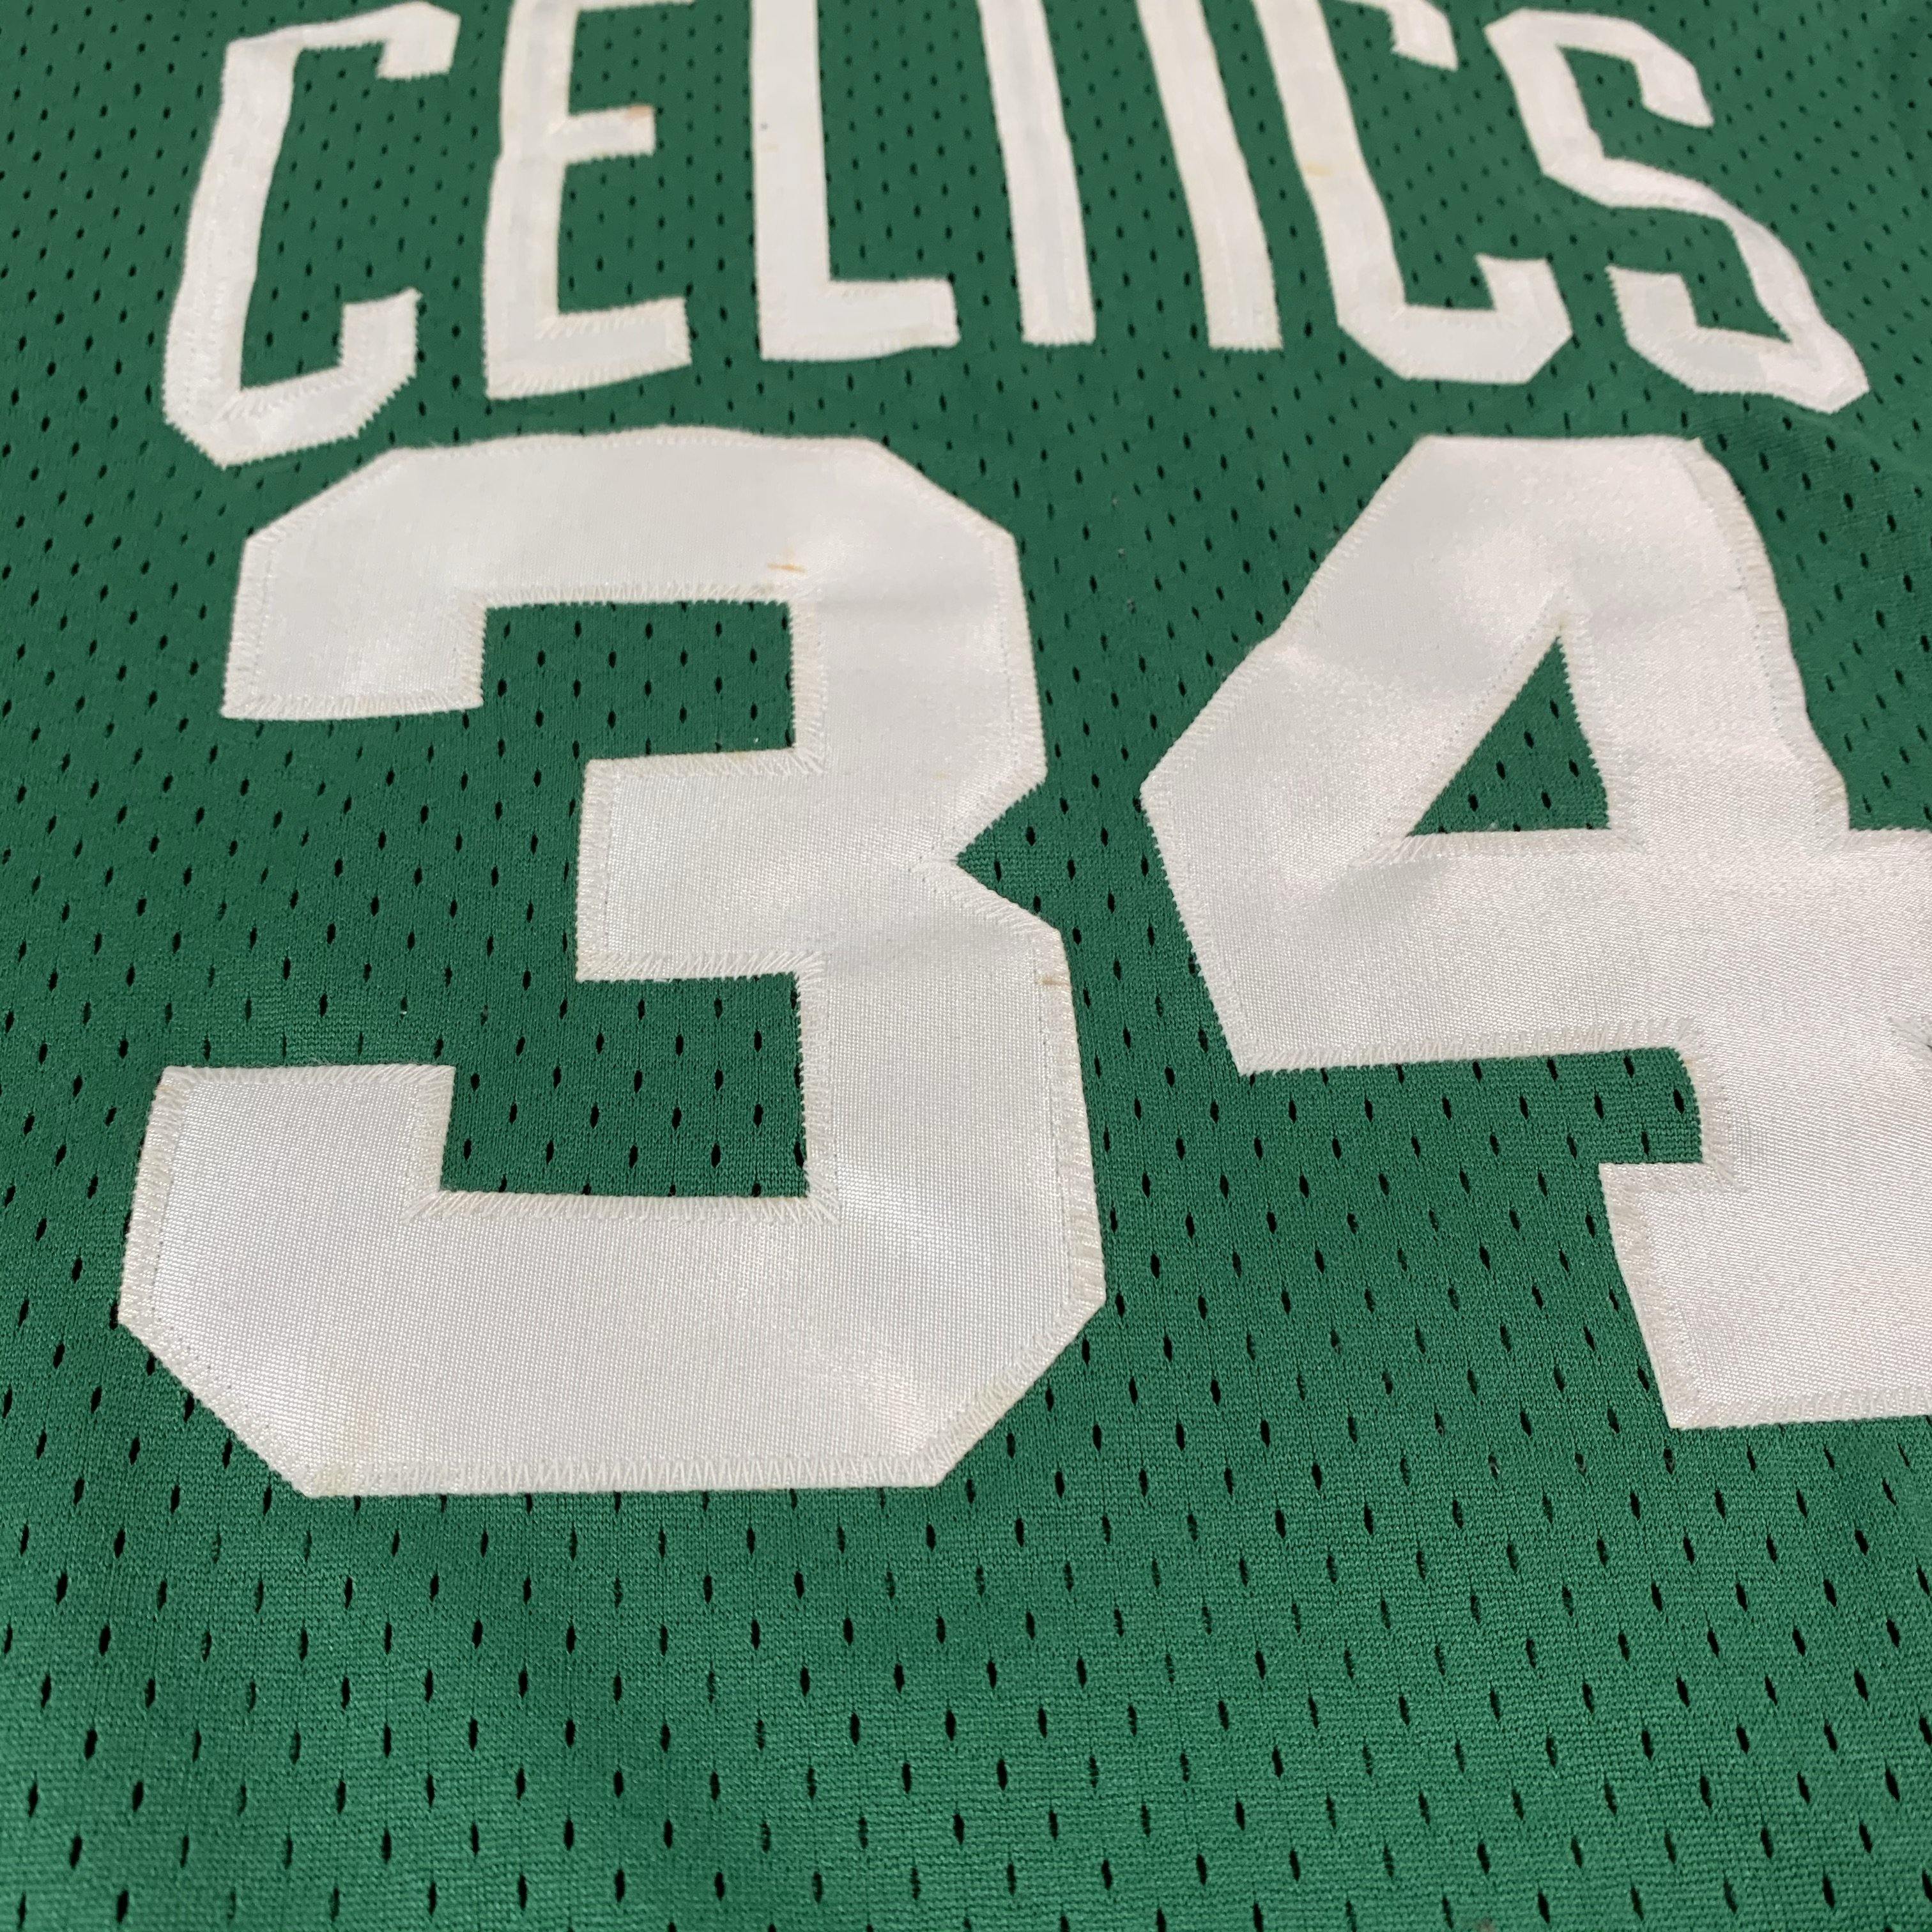 Nike, Shirts, Paul Pierce Boston Celtics Nike Clover Jersey Xxl